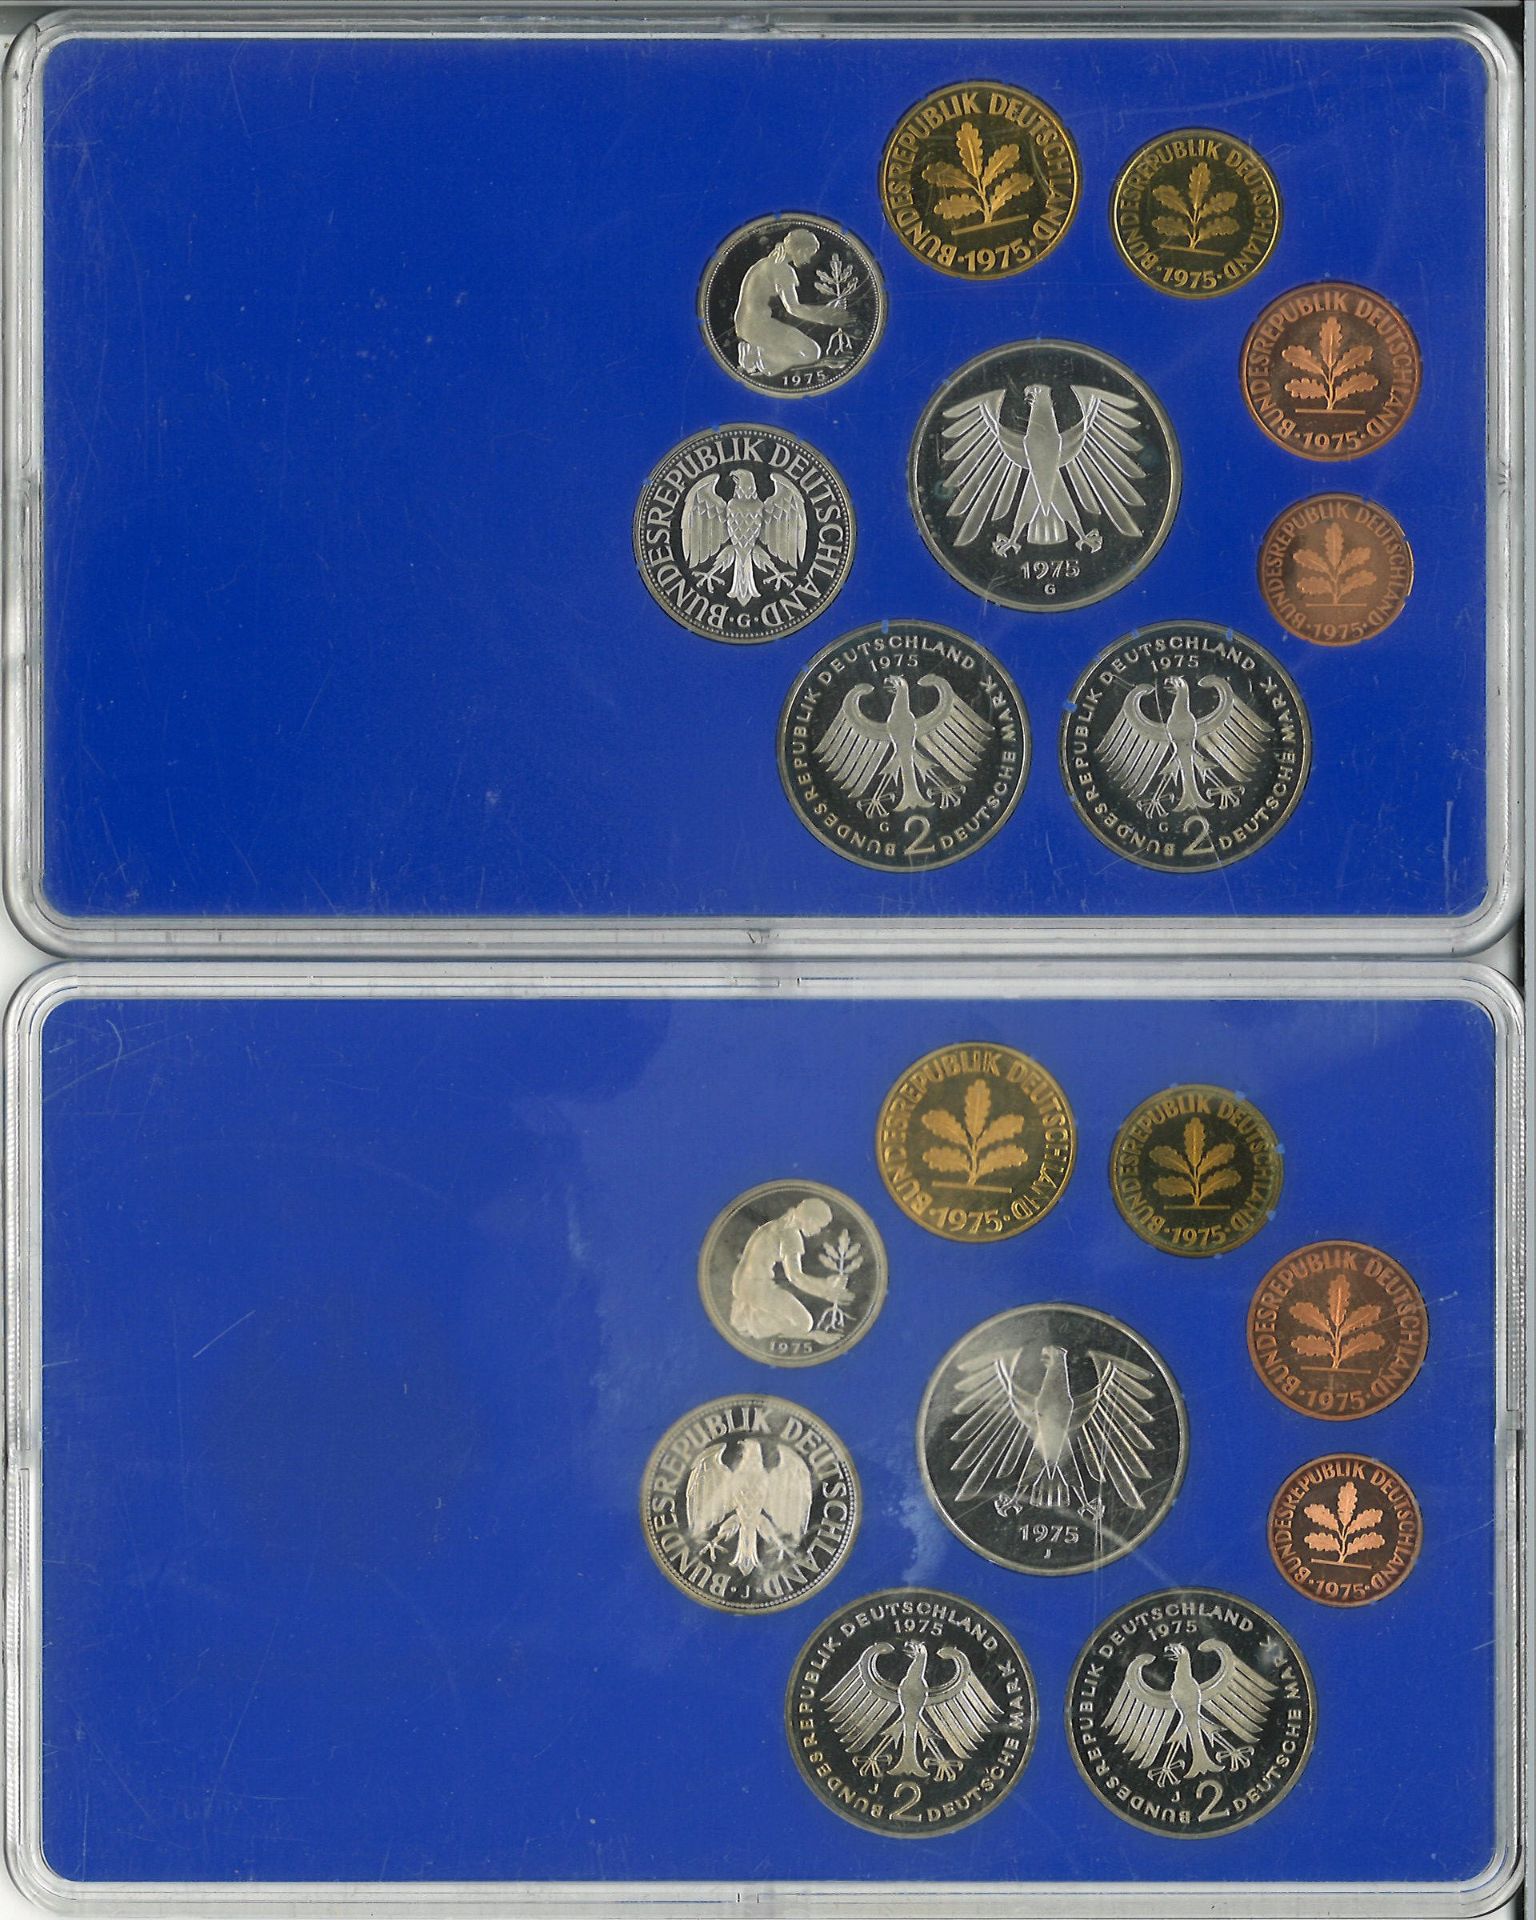 BRD Münzsets Jahrgang 1975, D, F, G und J. Im Original Blister. - Bild 3 aus 4